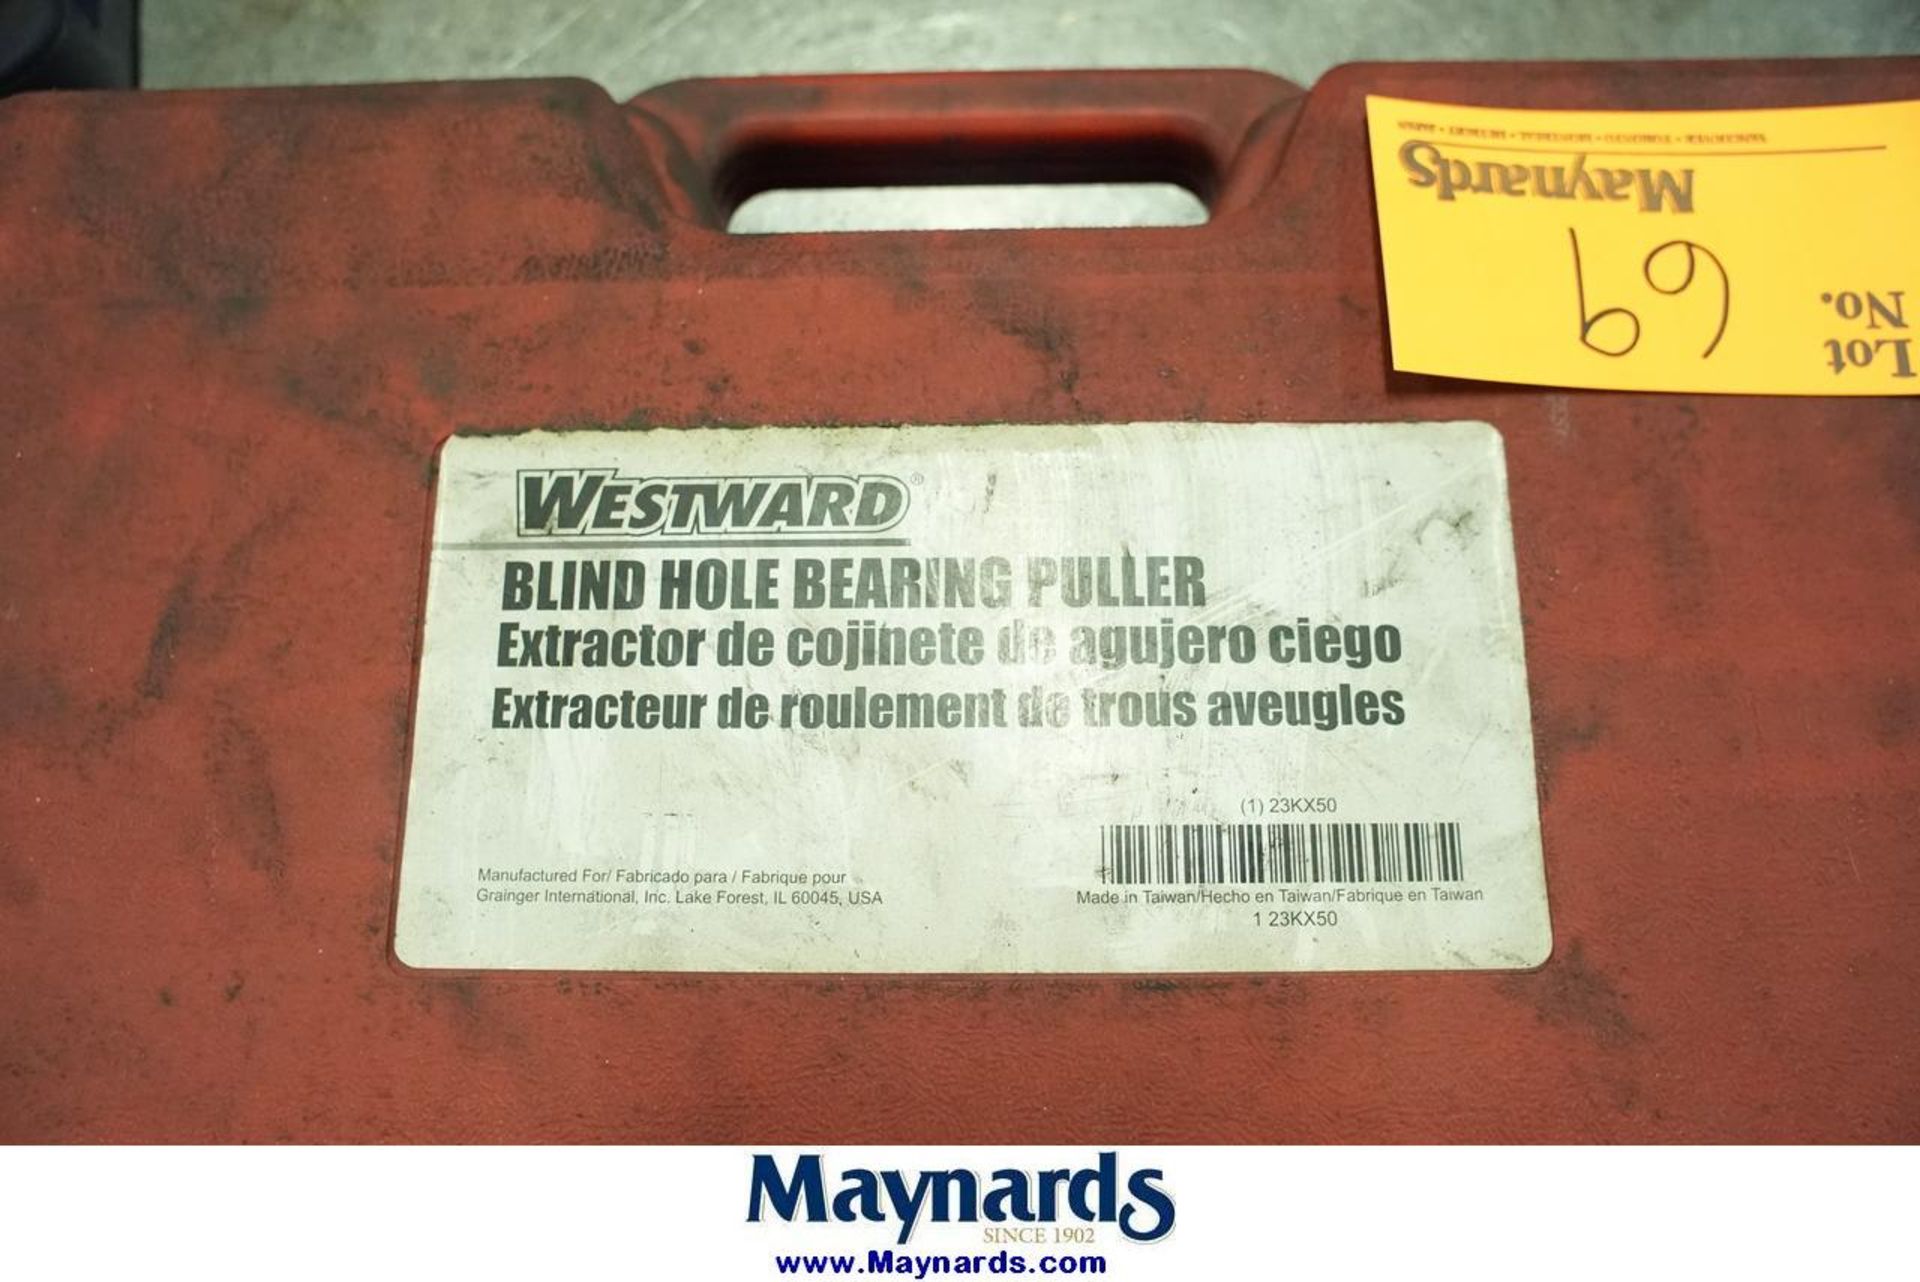 Westward Model 23KX50 Blind Hole Bearing Puller - Image 2 of 2